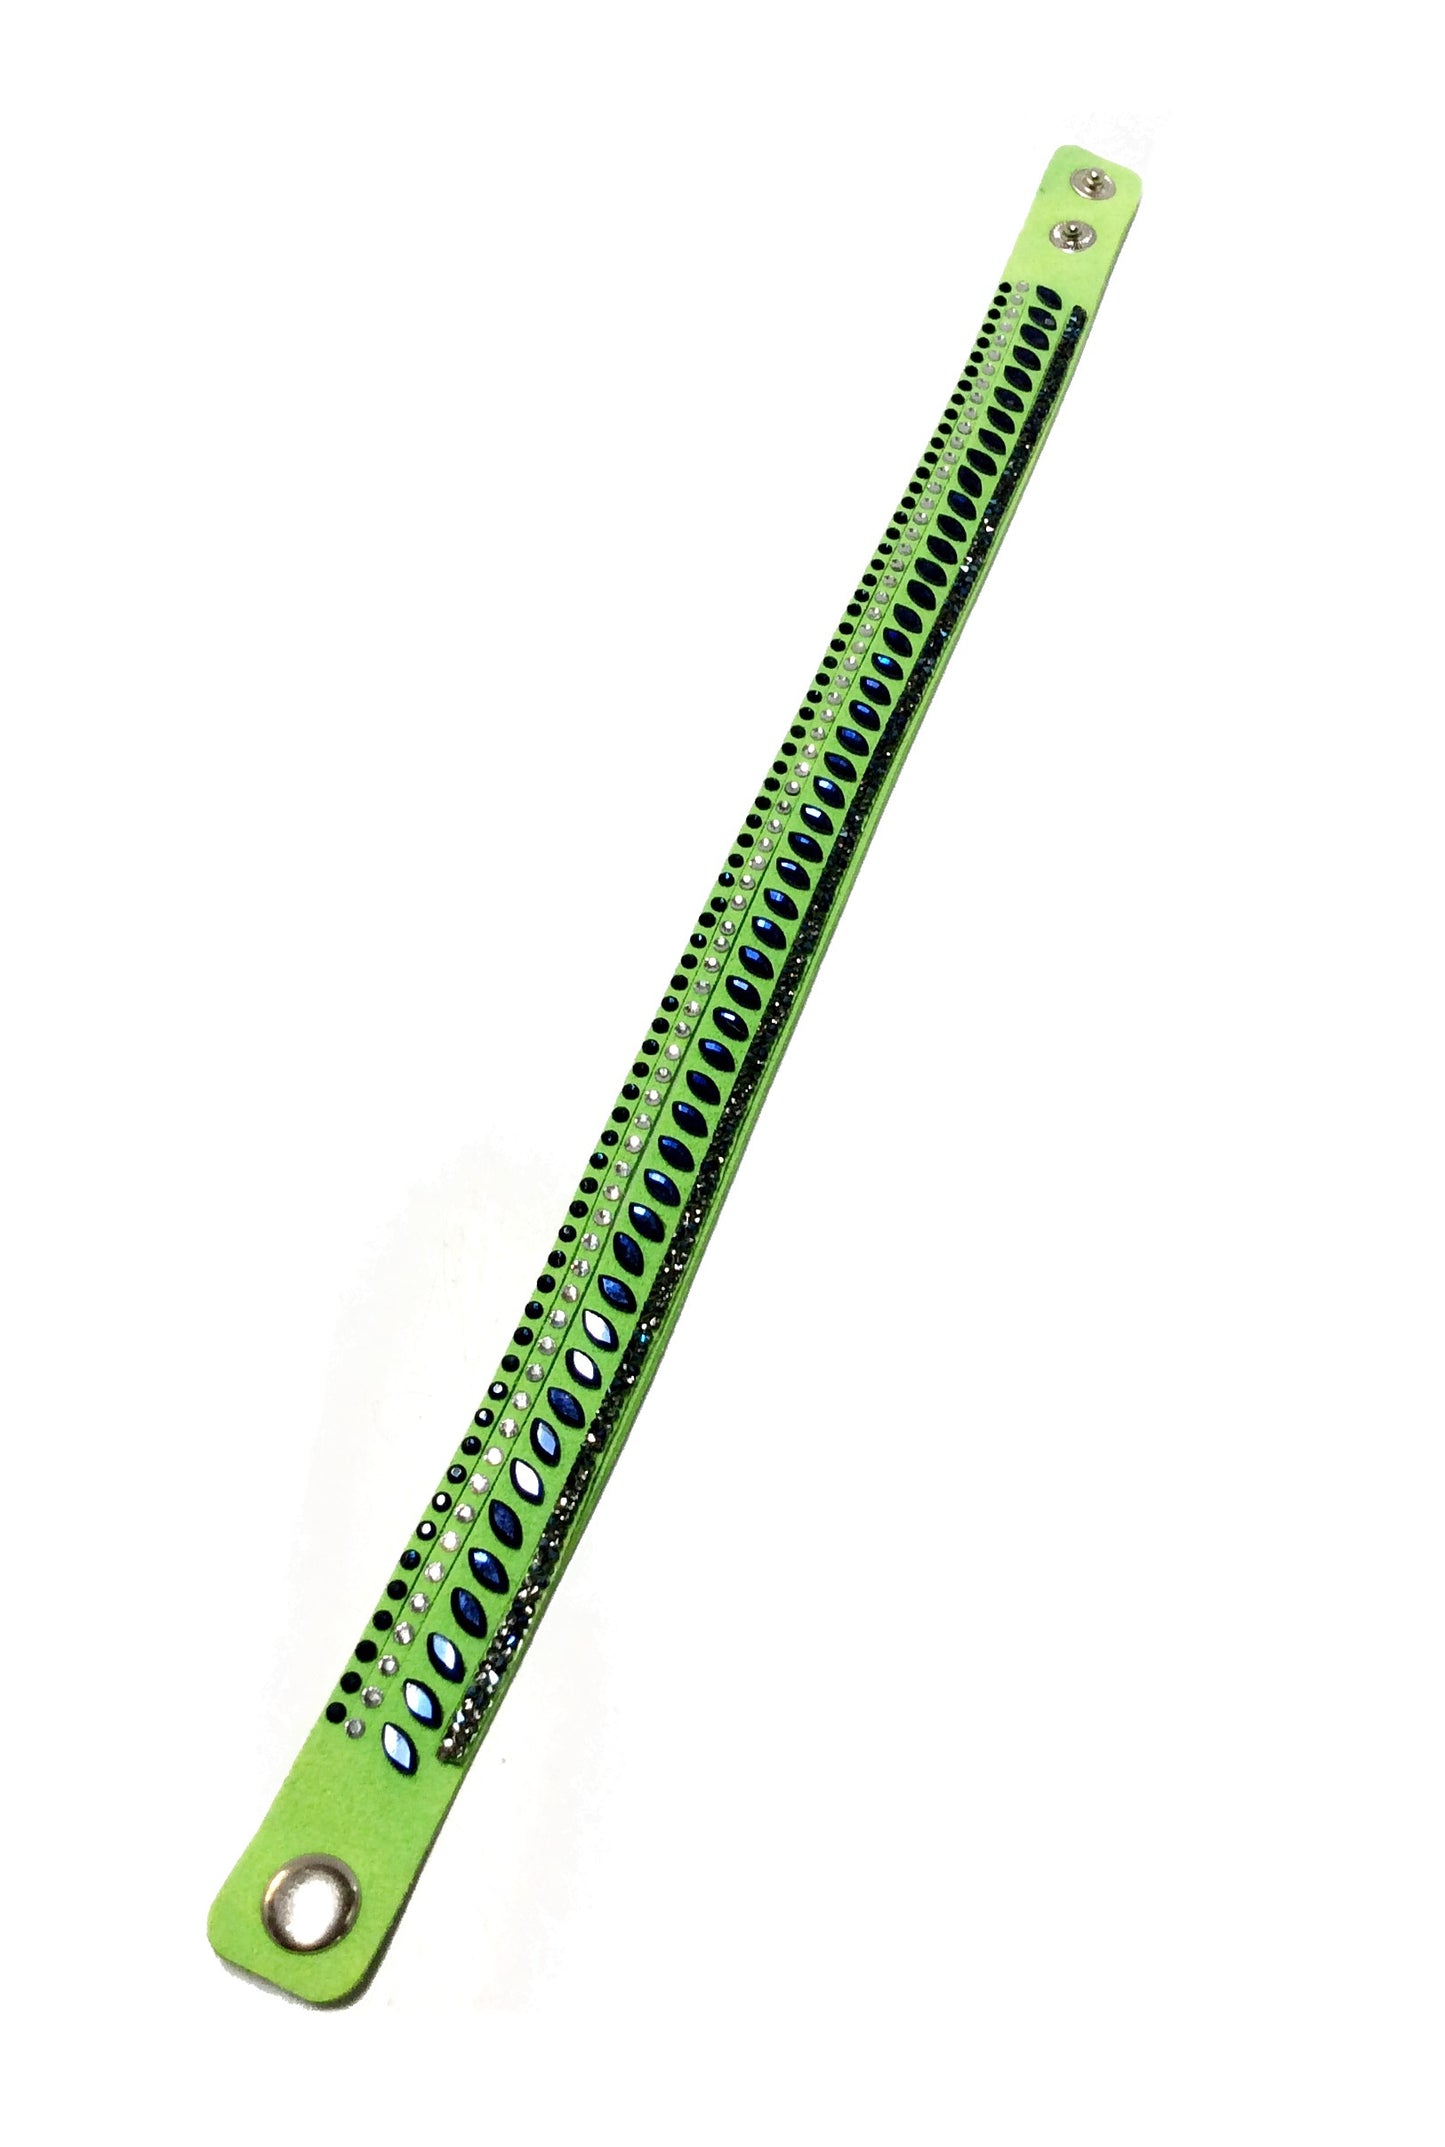 Wrap Around Snap Bracelet (Green) #88-110011GN